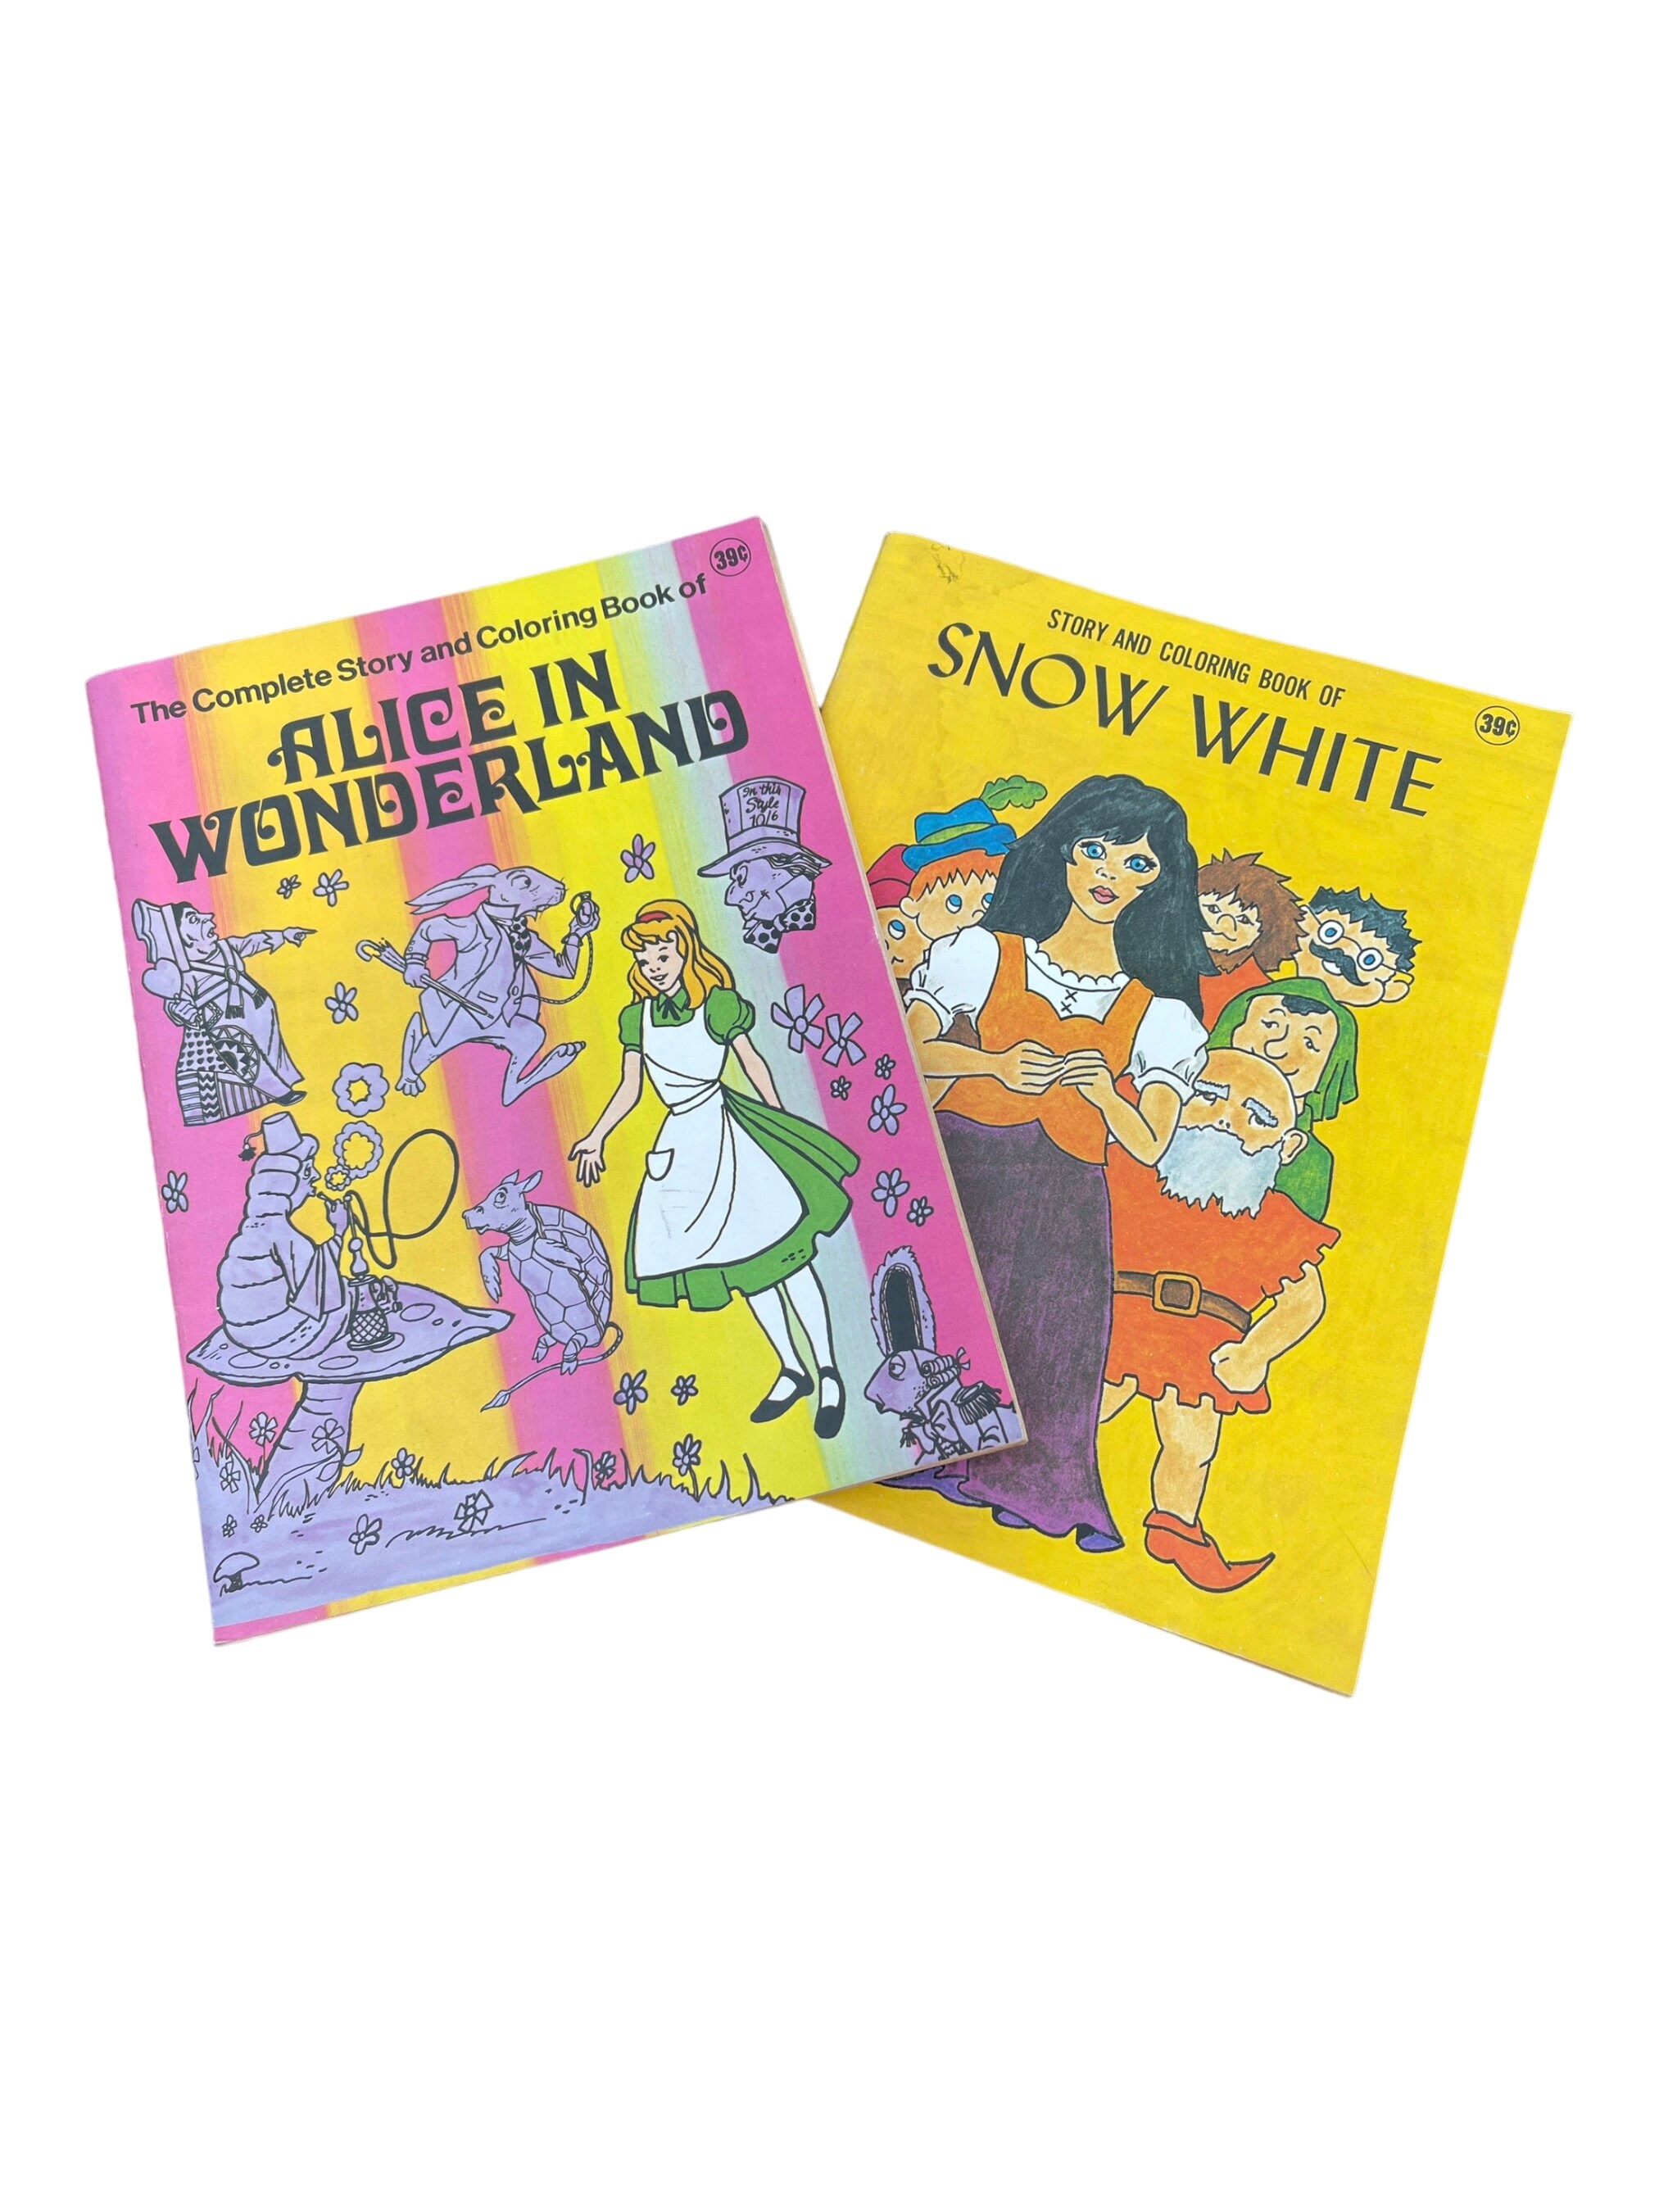 Digital Coloring Book Instant Download Alice in Waterland, Wonderland,  Digi, Stamps, Coloring Books, Adult Color 